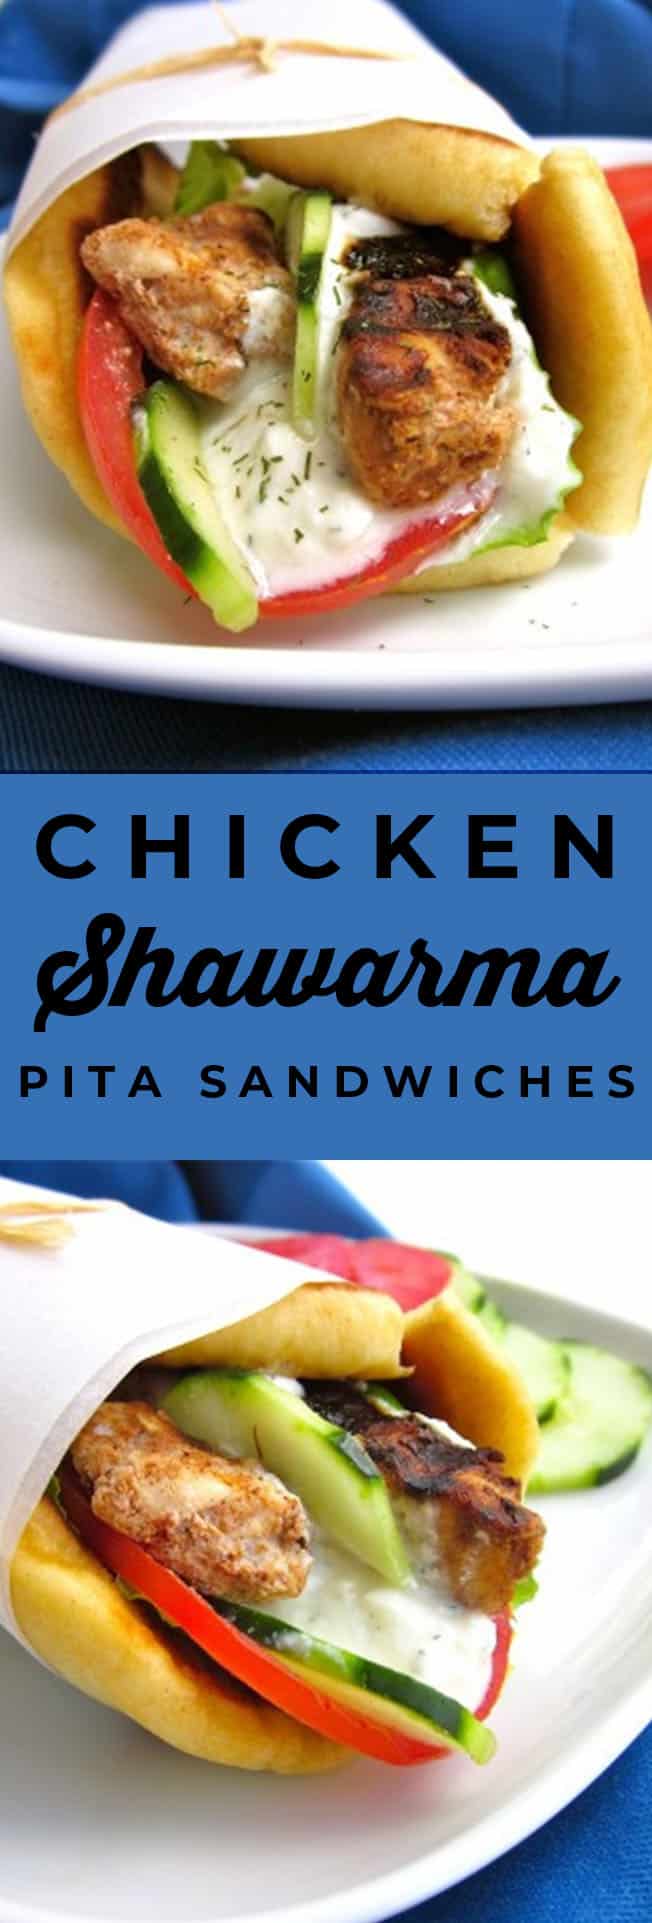 Chicken Shawarma recipe